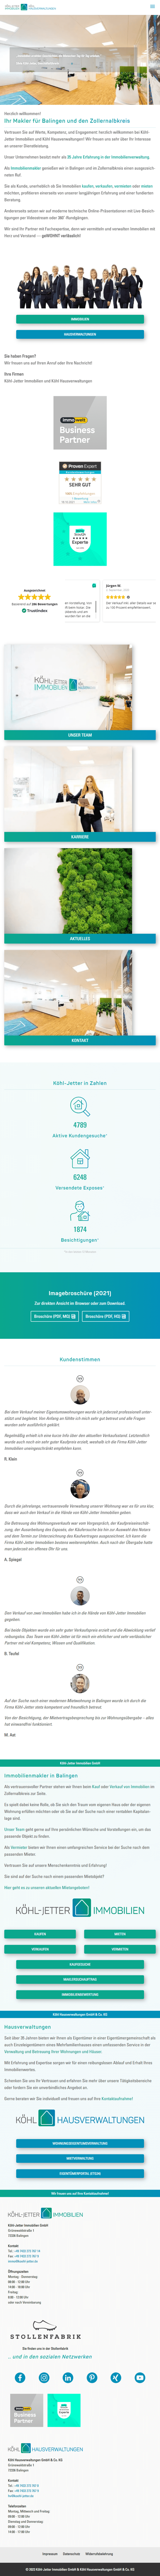 Website der Köhl-Jetter Immobilien GmbH & Köhl Hausverwaltungen GmbH & Co. KG